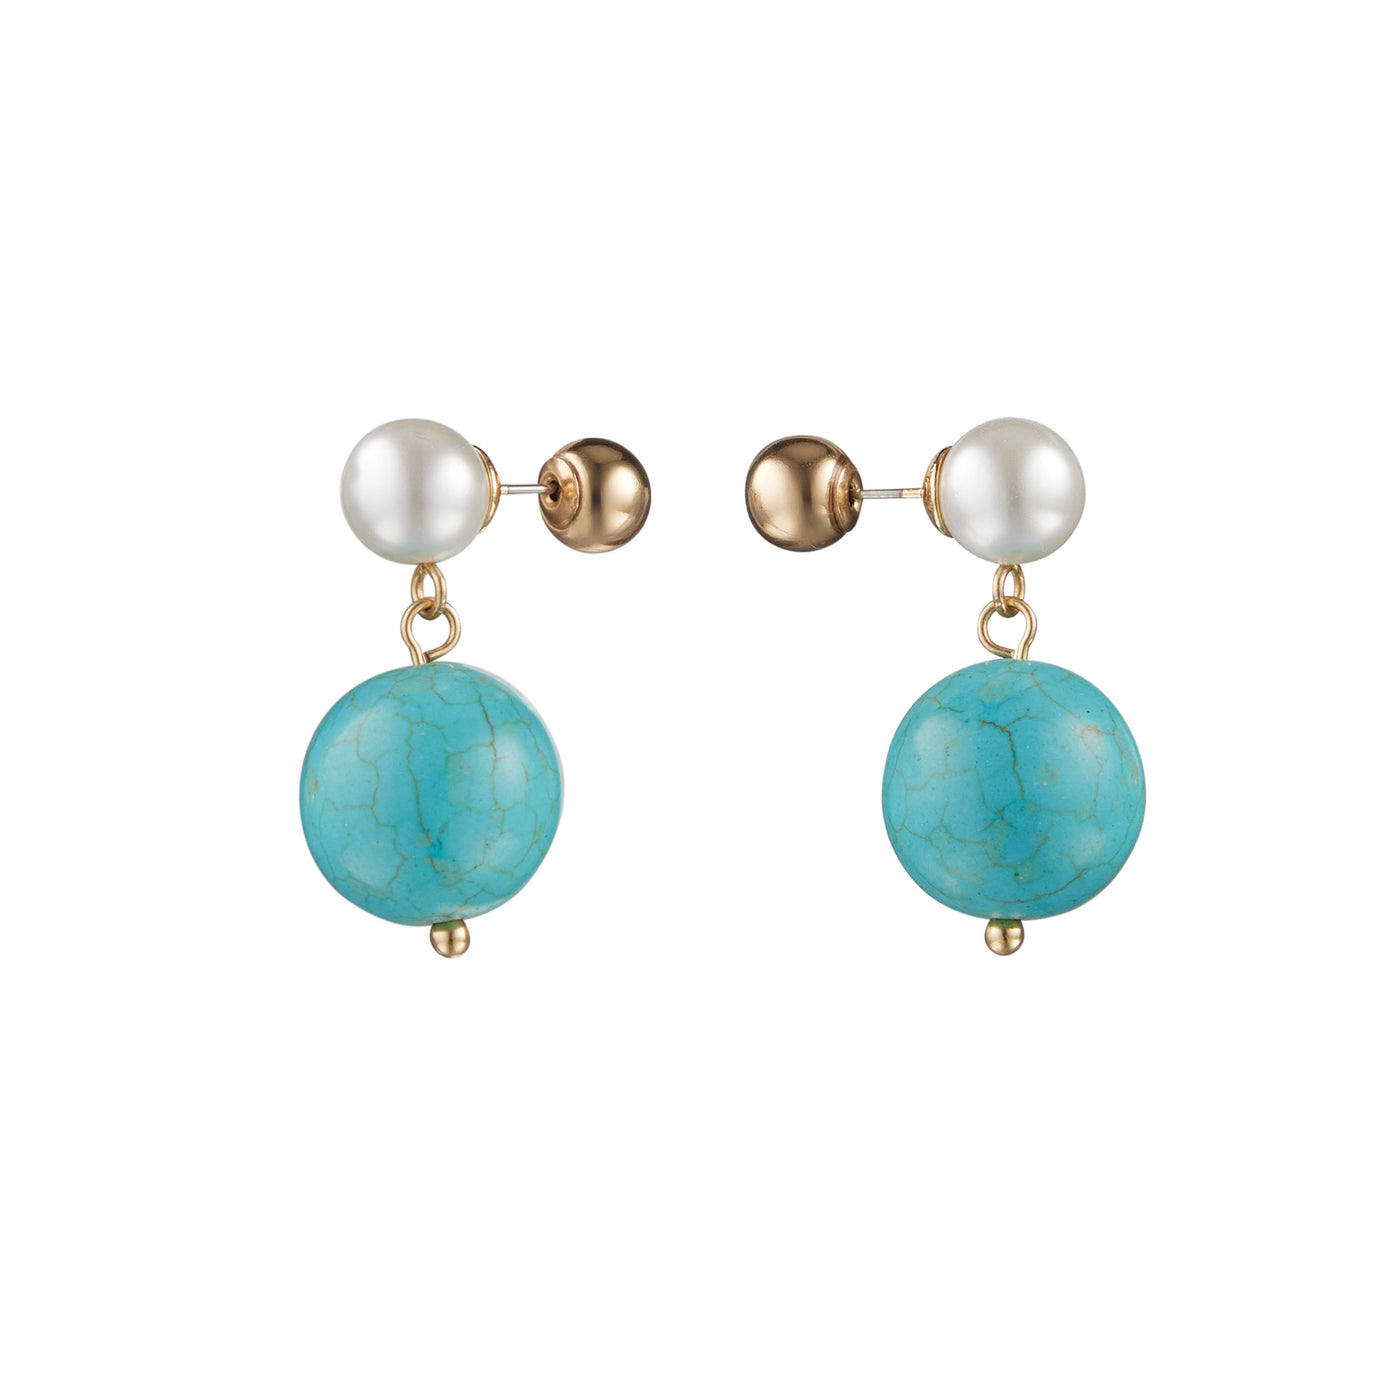 BOLLA EARRINGS, Turquoise / Pearl